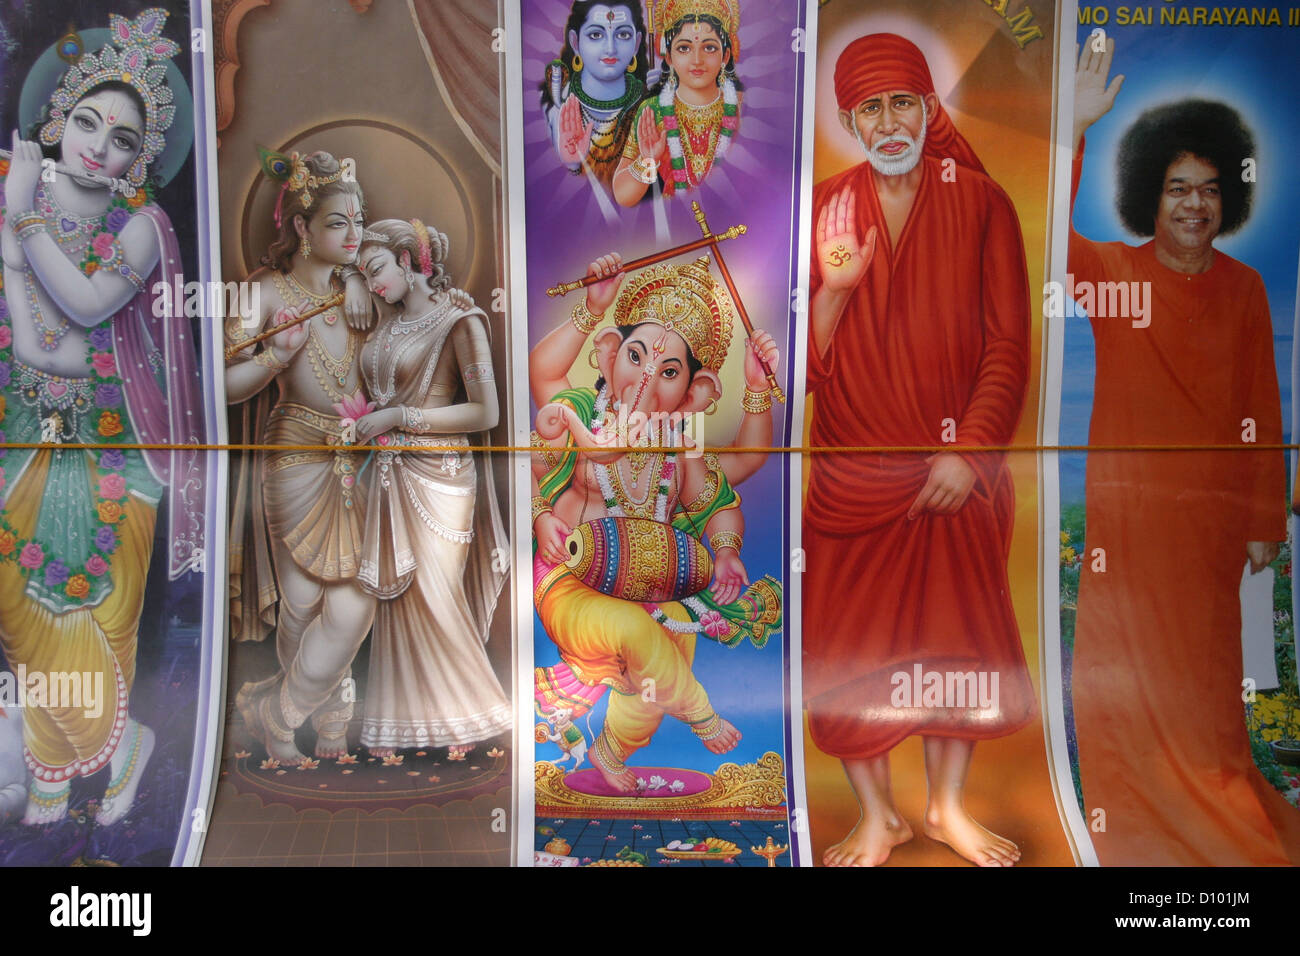 Pictures of Hindu gods (left to right) Krishna, Krishna and Radha, Ganesh, Shirdi Sai Baba, and Sathya Sai Baba. Stock Photo